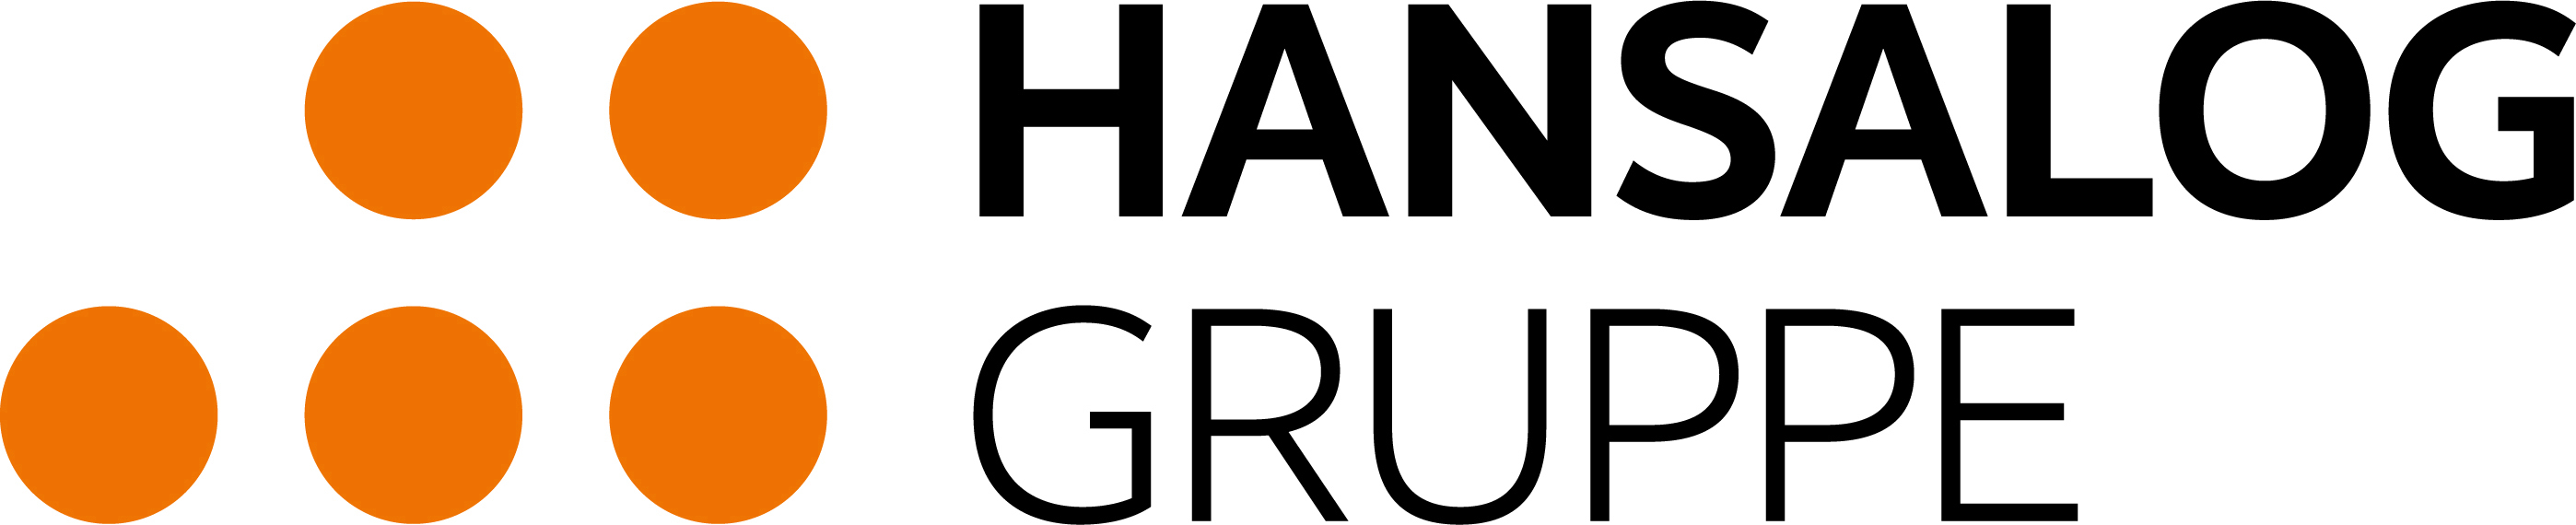 HANSALOG GmbH & Co. KG Logo